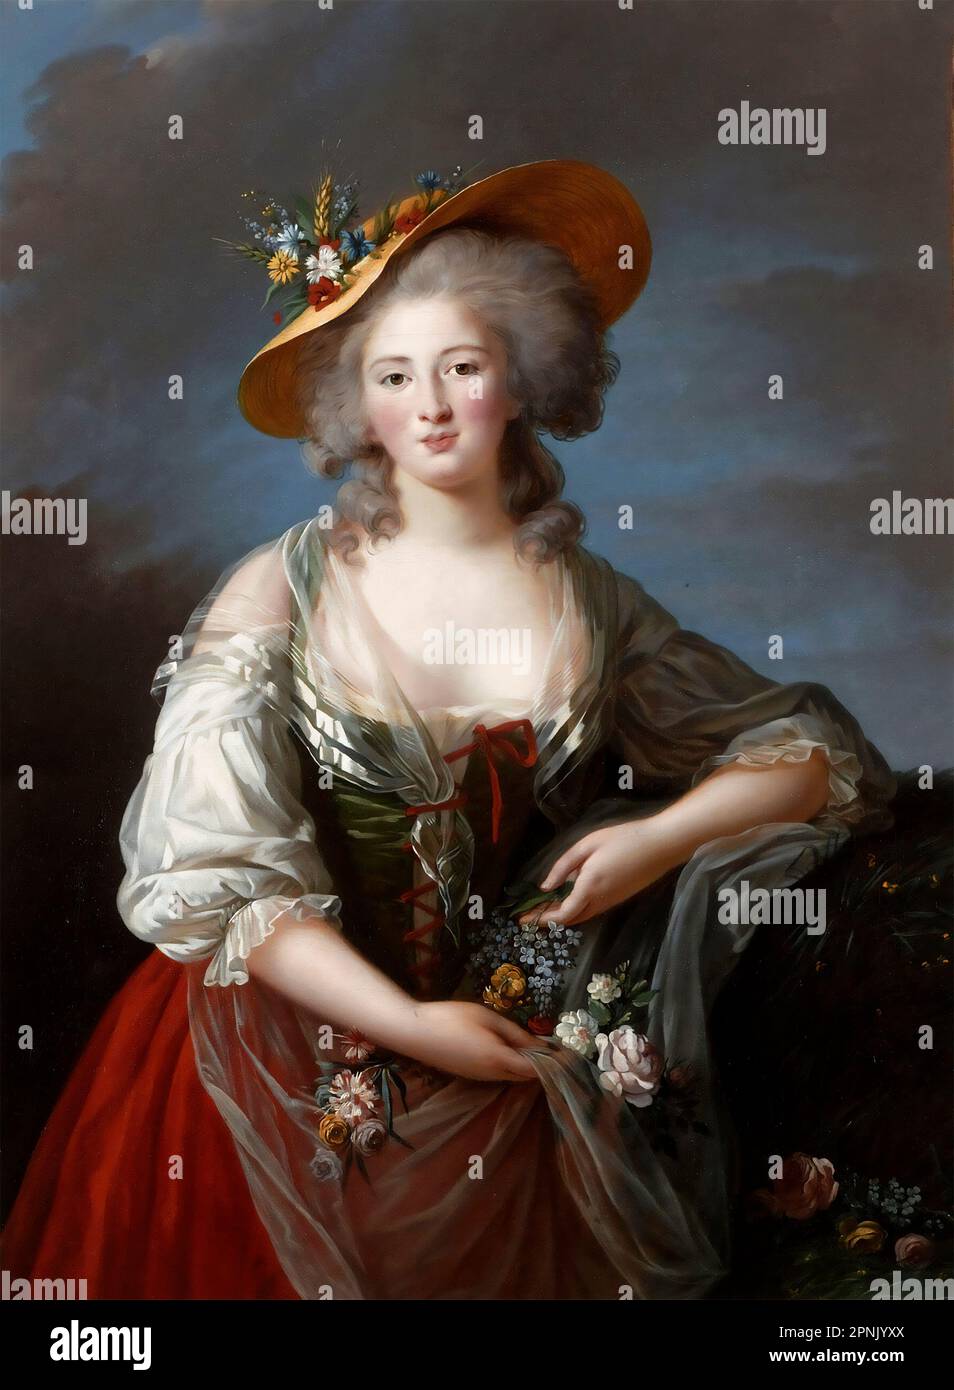 Elisabeth-Philippe-Marie-Hélène de France, sagte Madame Elisabeth von Elisabeth Vigée Le Brun (1755-1842), Öl auf Leinwand, 1782 Stockfoto